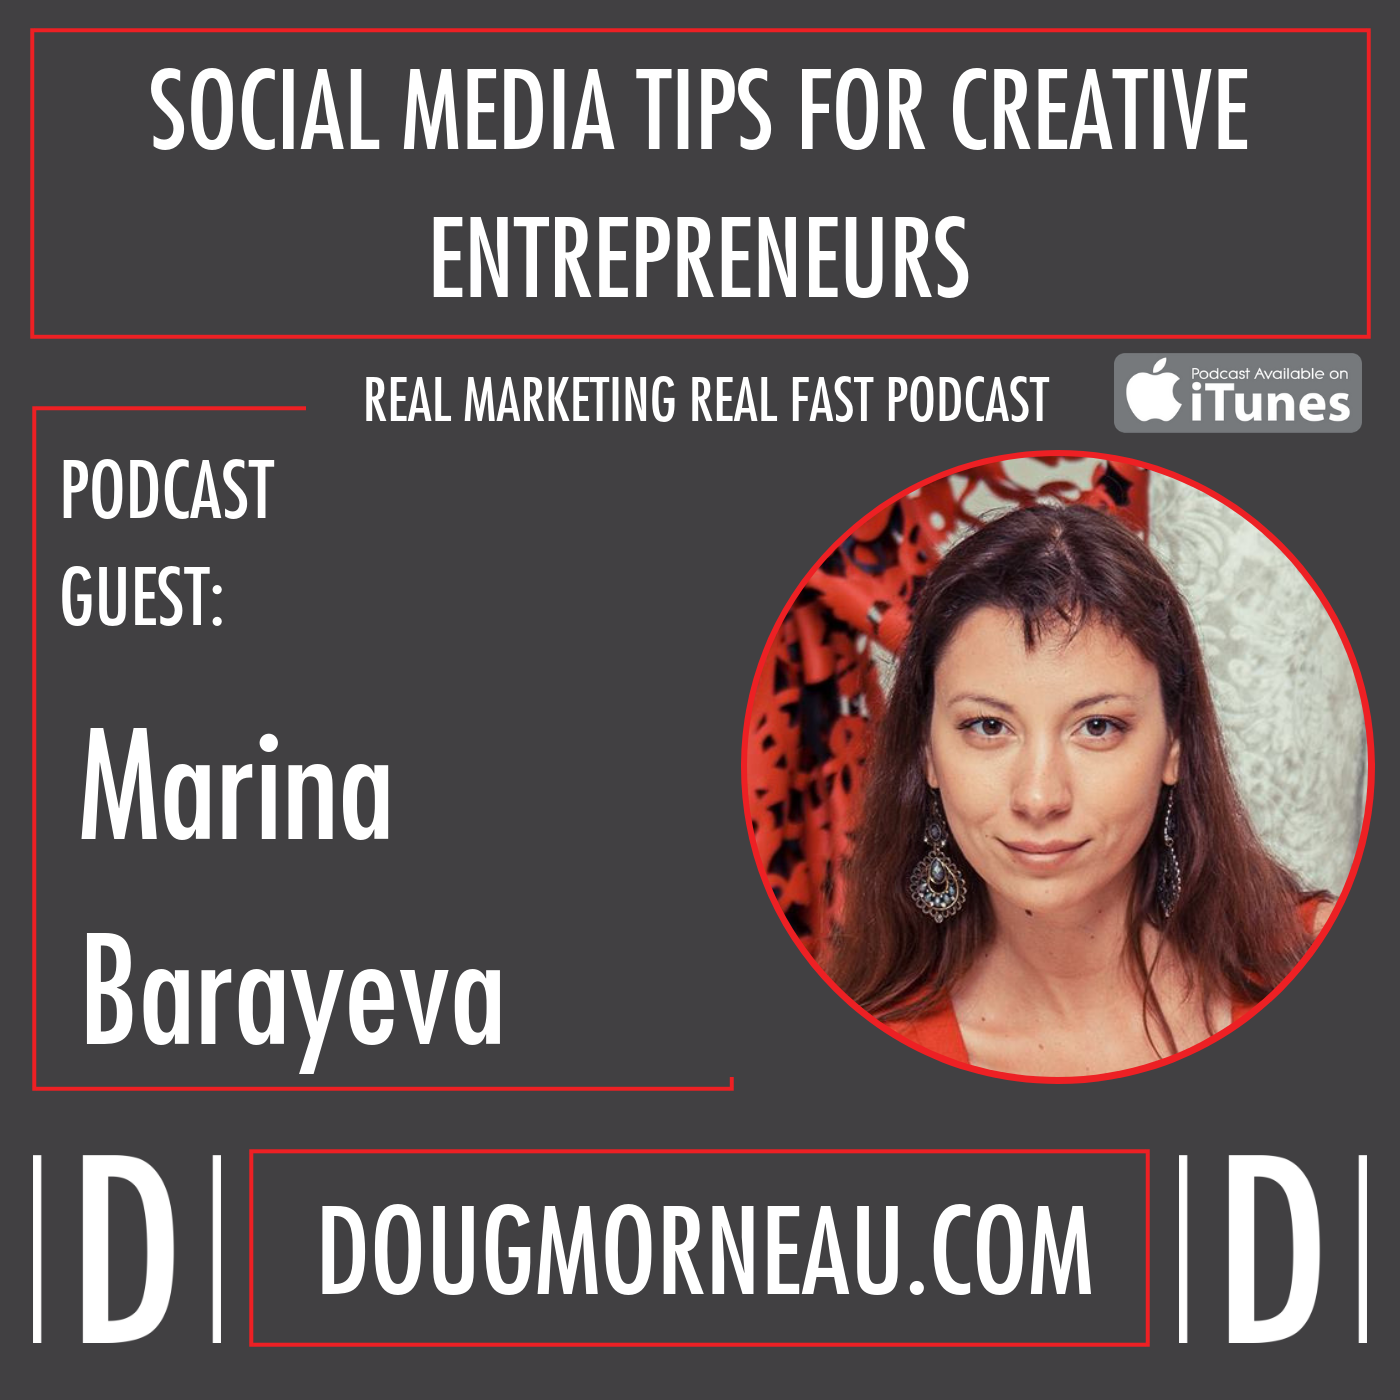 SOCIAL MEDIA FOR CREATIVE ENTREPRENEURS MARINA BARAYEVA - DOUG MORNEAU - REAL MARKETING REAL FAST PODCAST